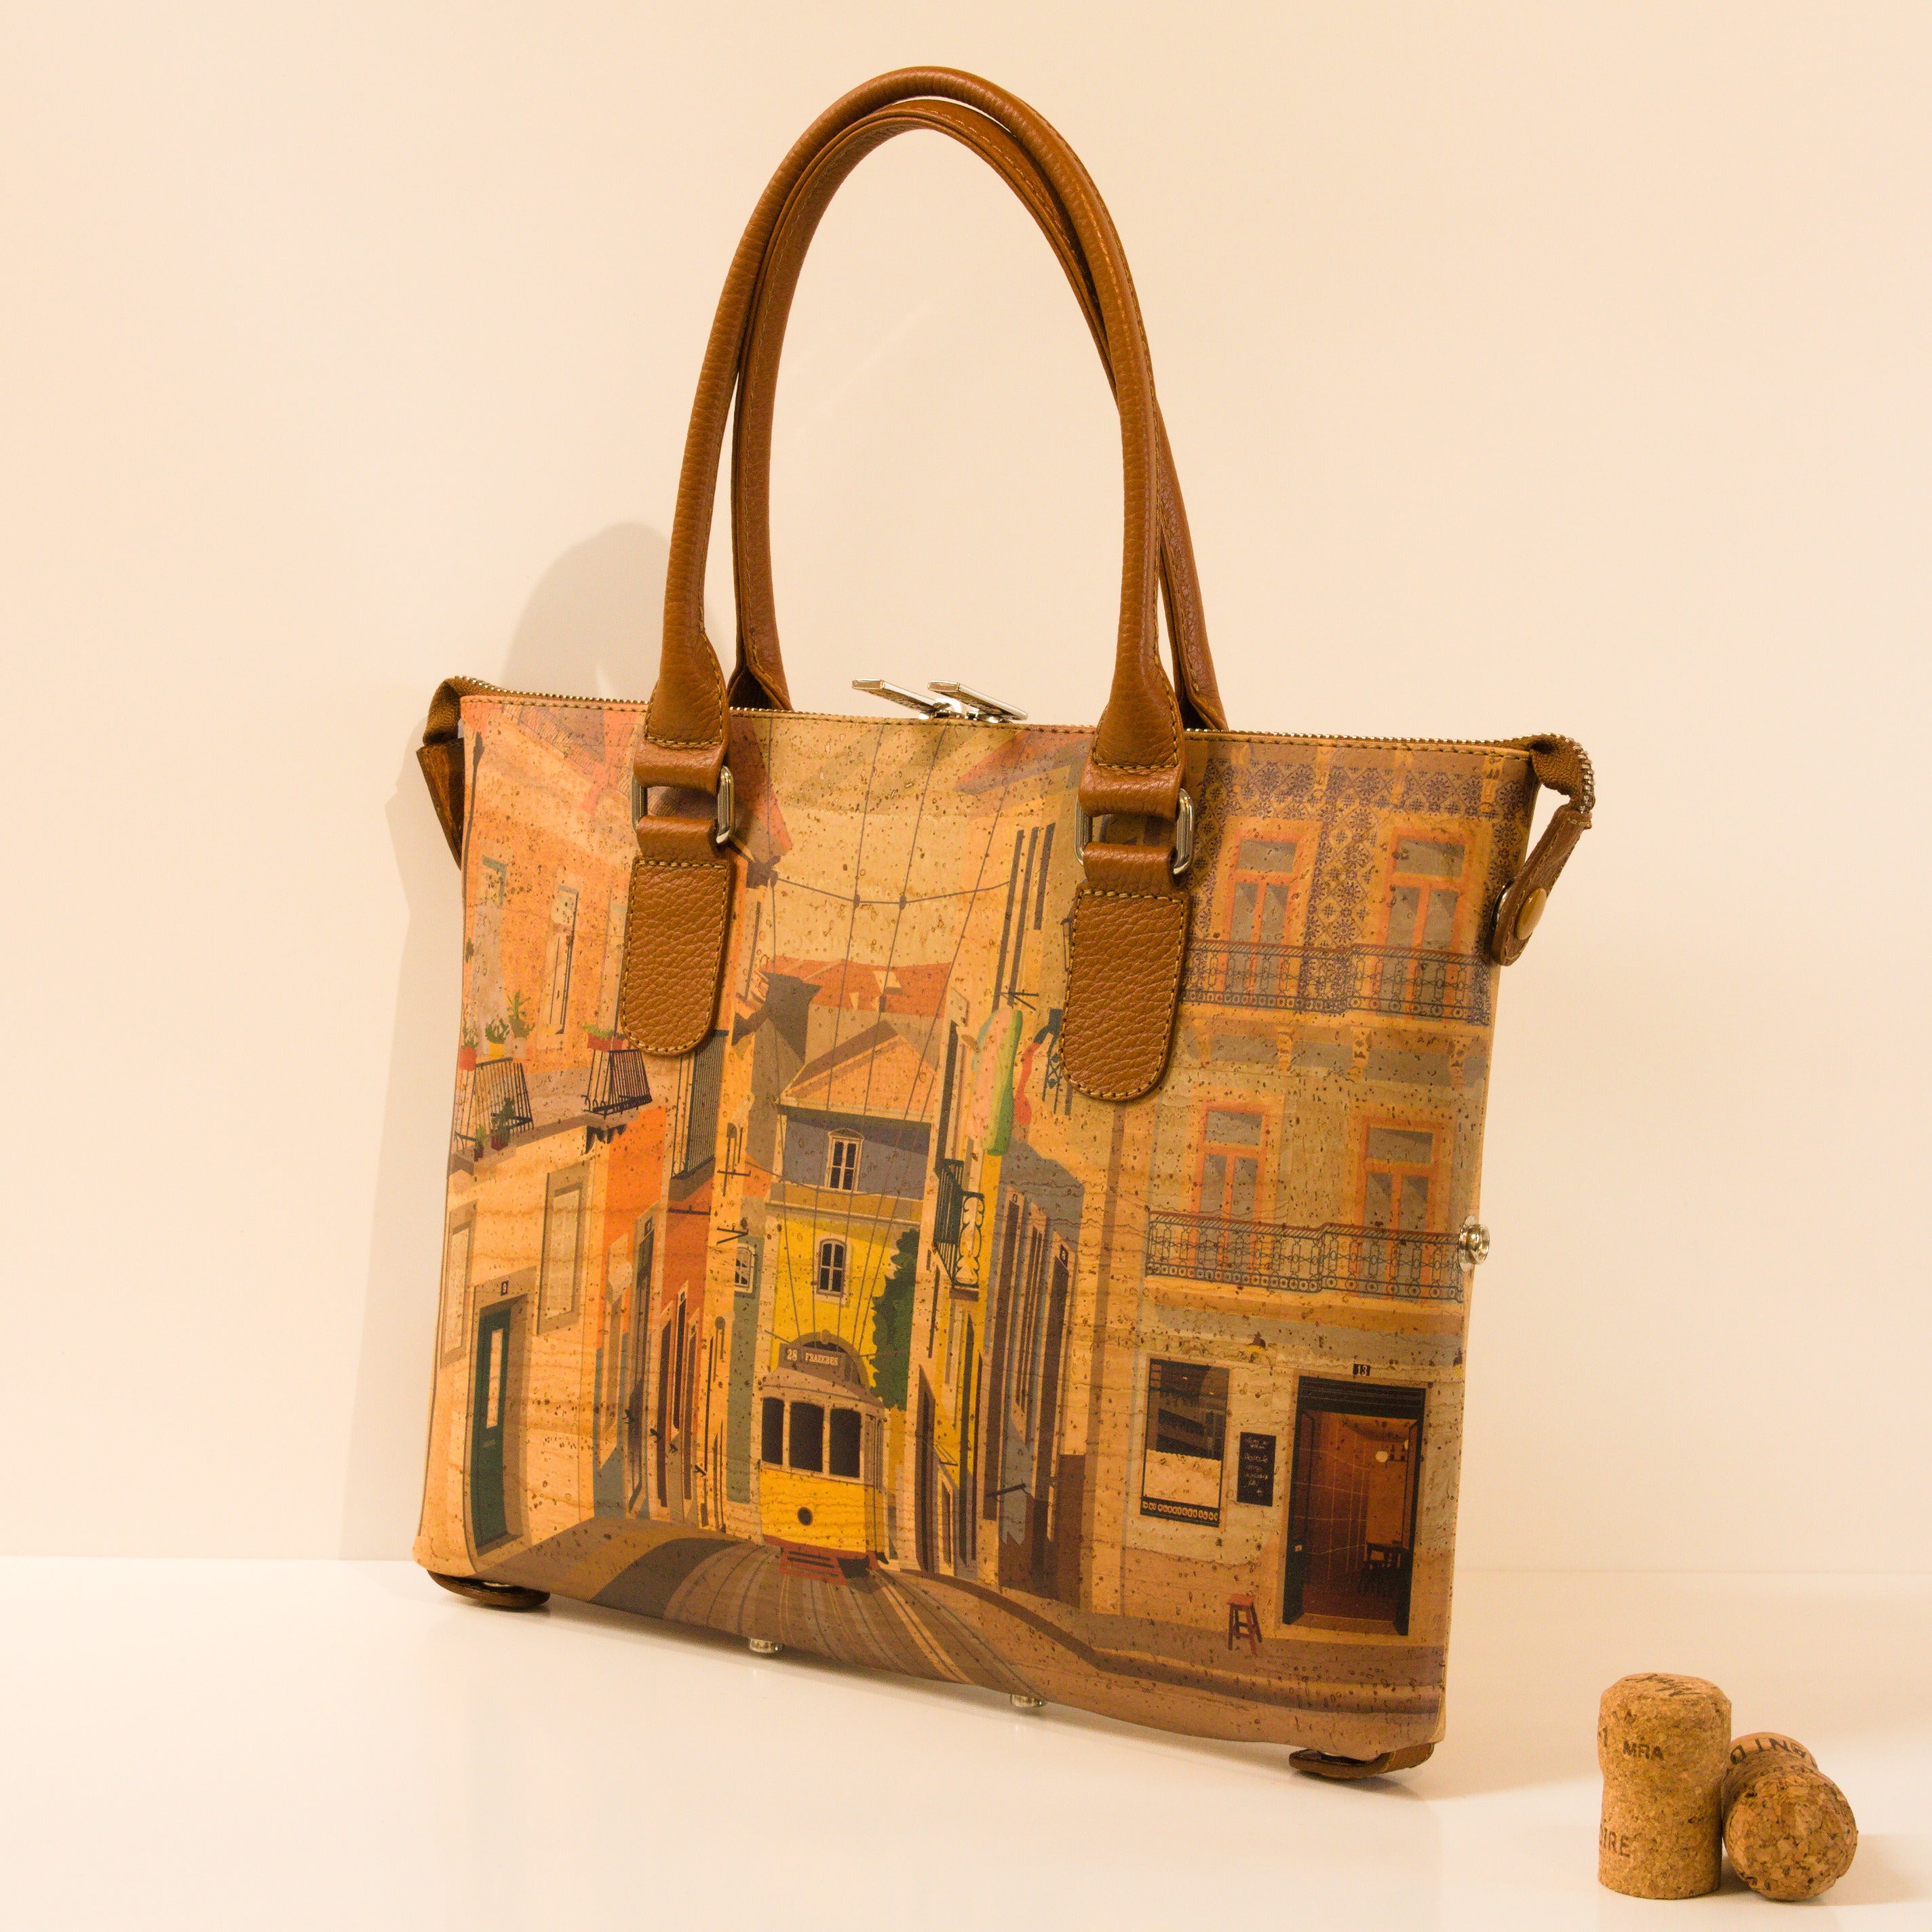 Cork handbag 3in1 * 2 sizes * different designs * shoulder bag for women * crossbody * shopper * handmade in Portugal